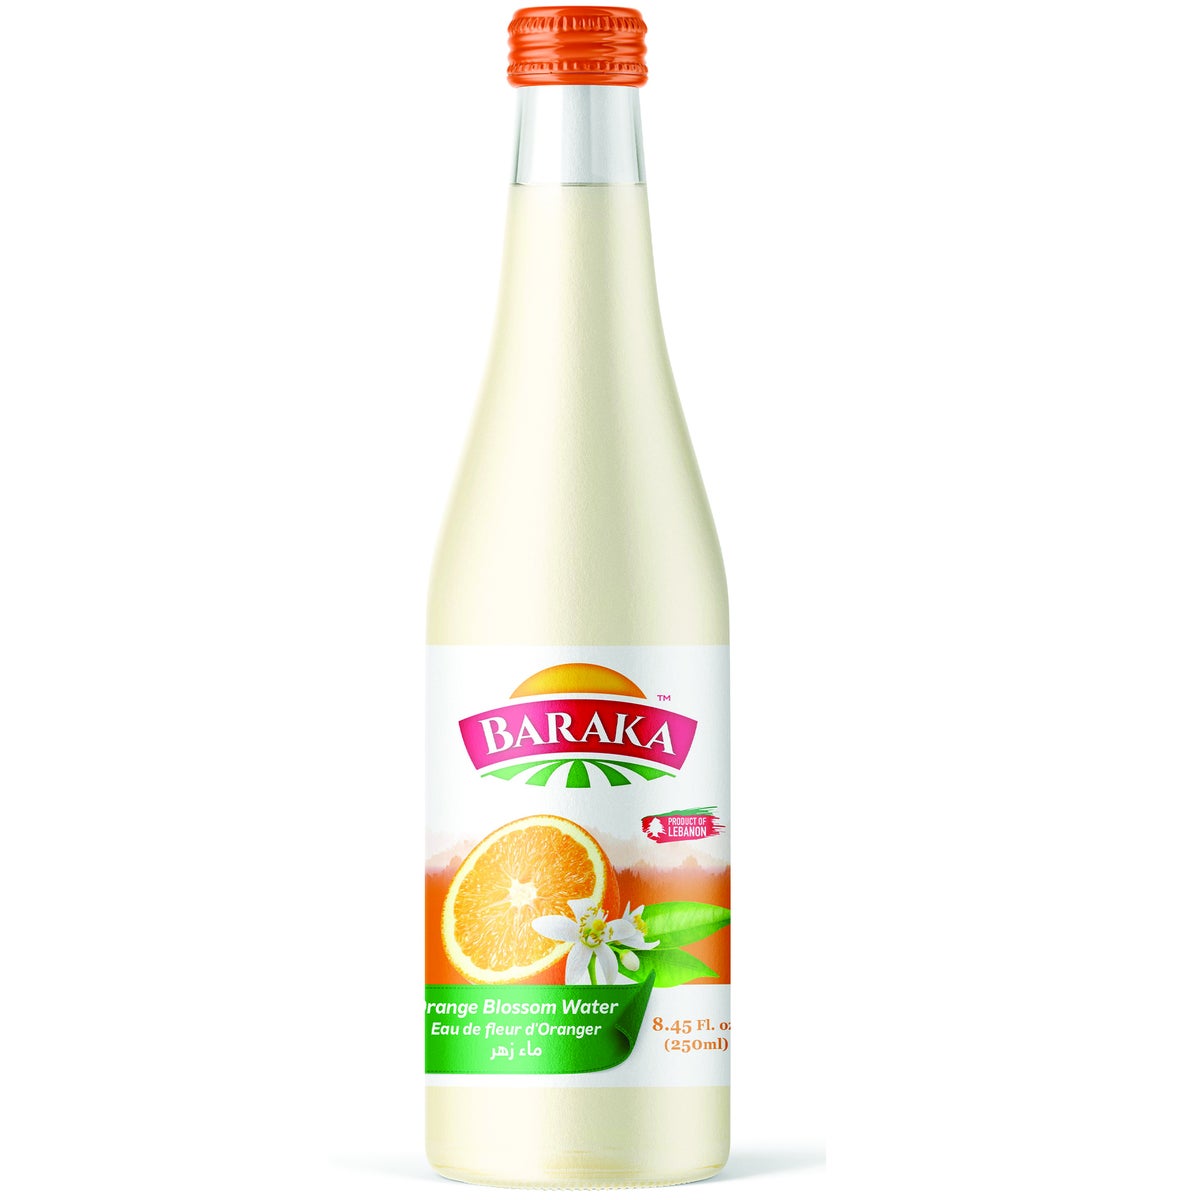 Orange Blossom Water "Baraka" 8.45 Fl oz * 24